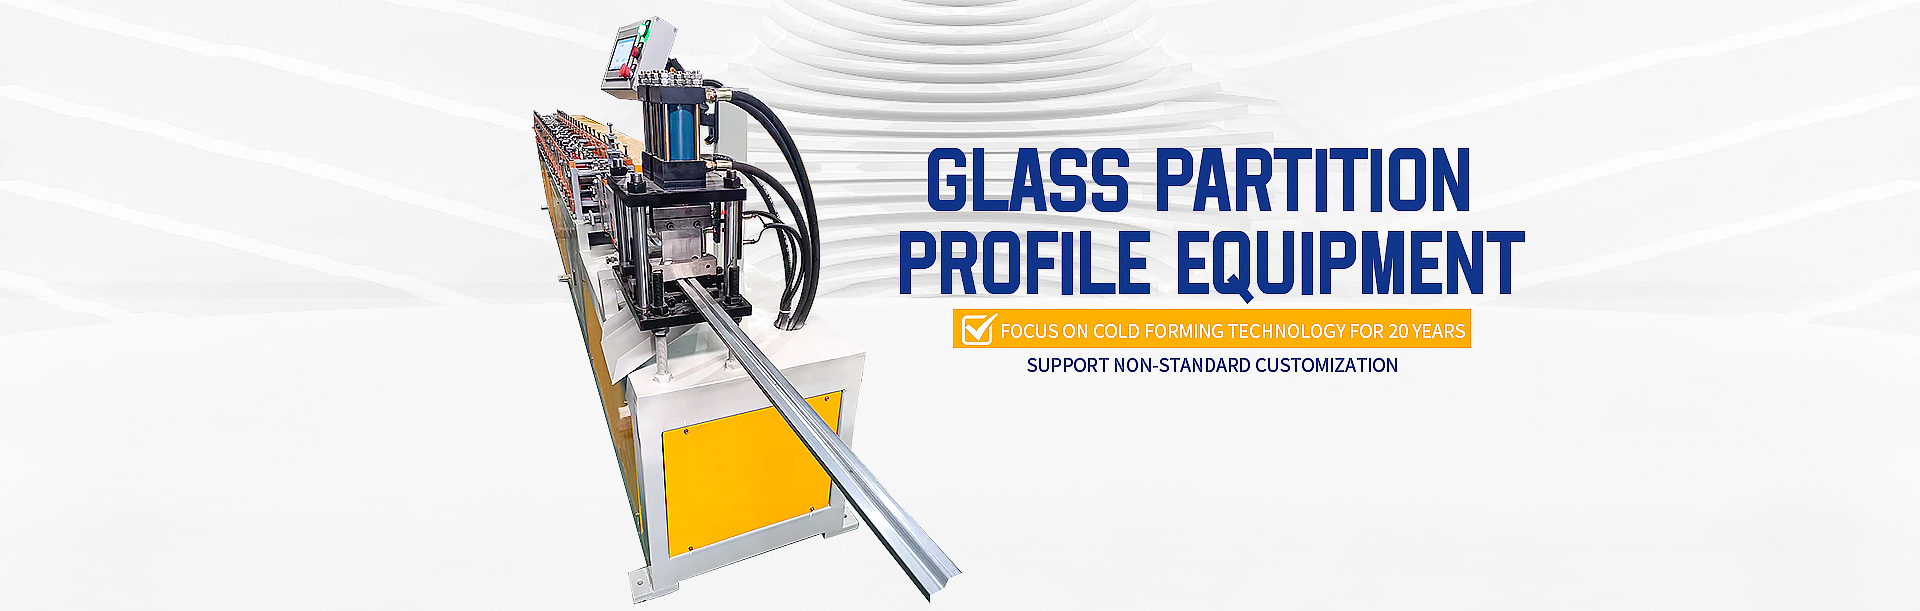 Glass partition profile equipment